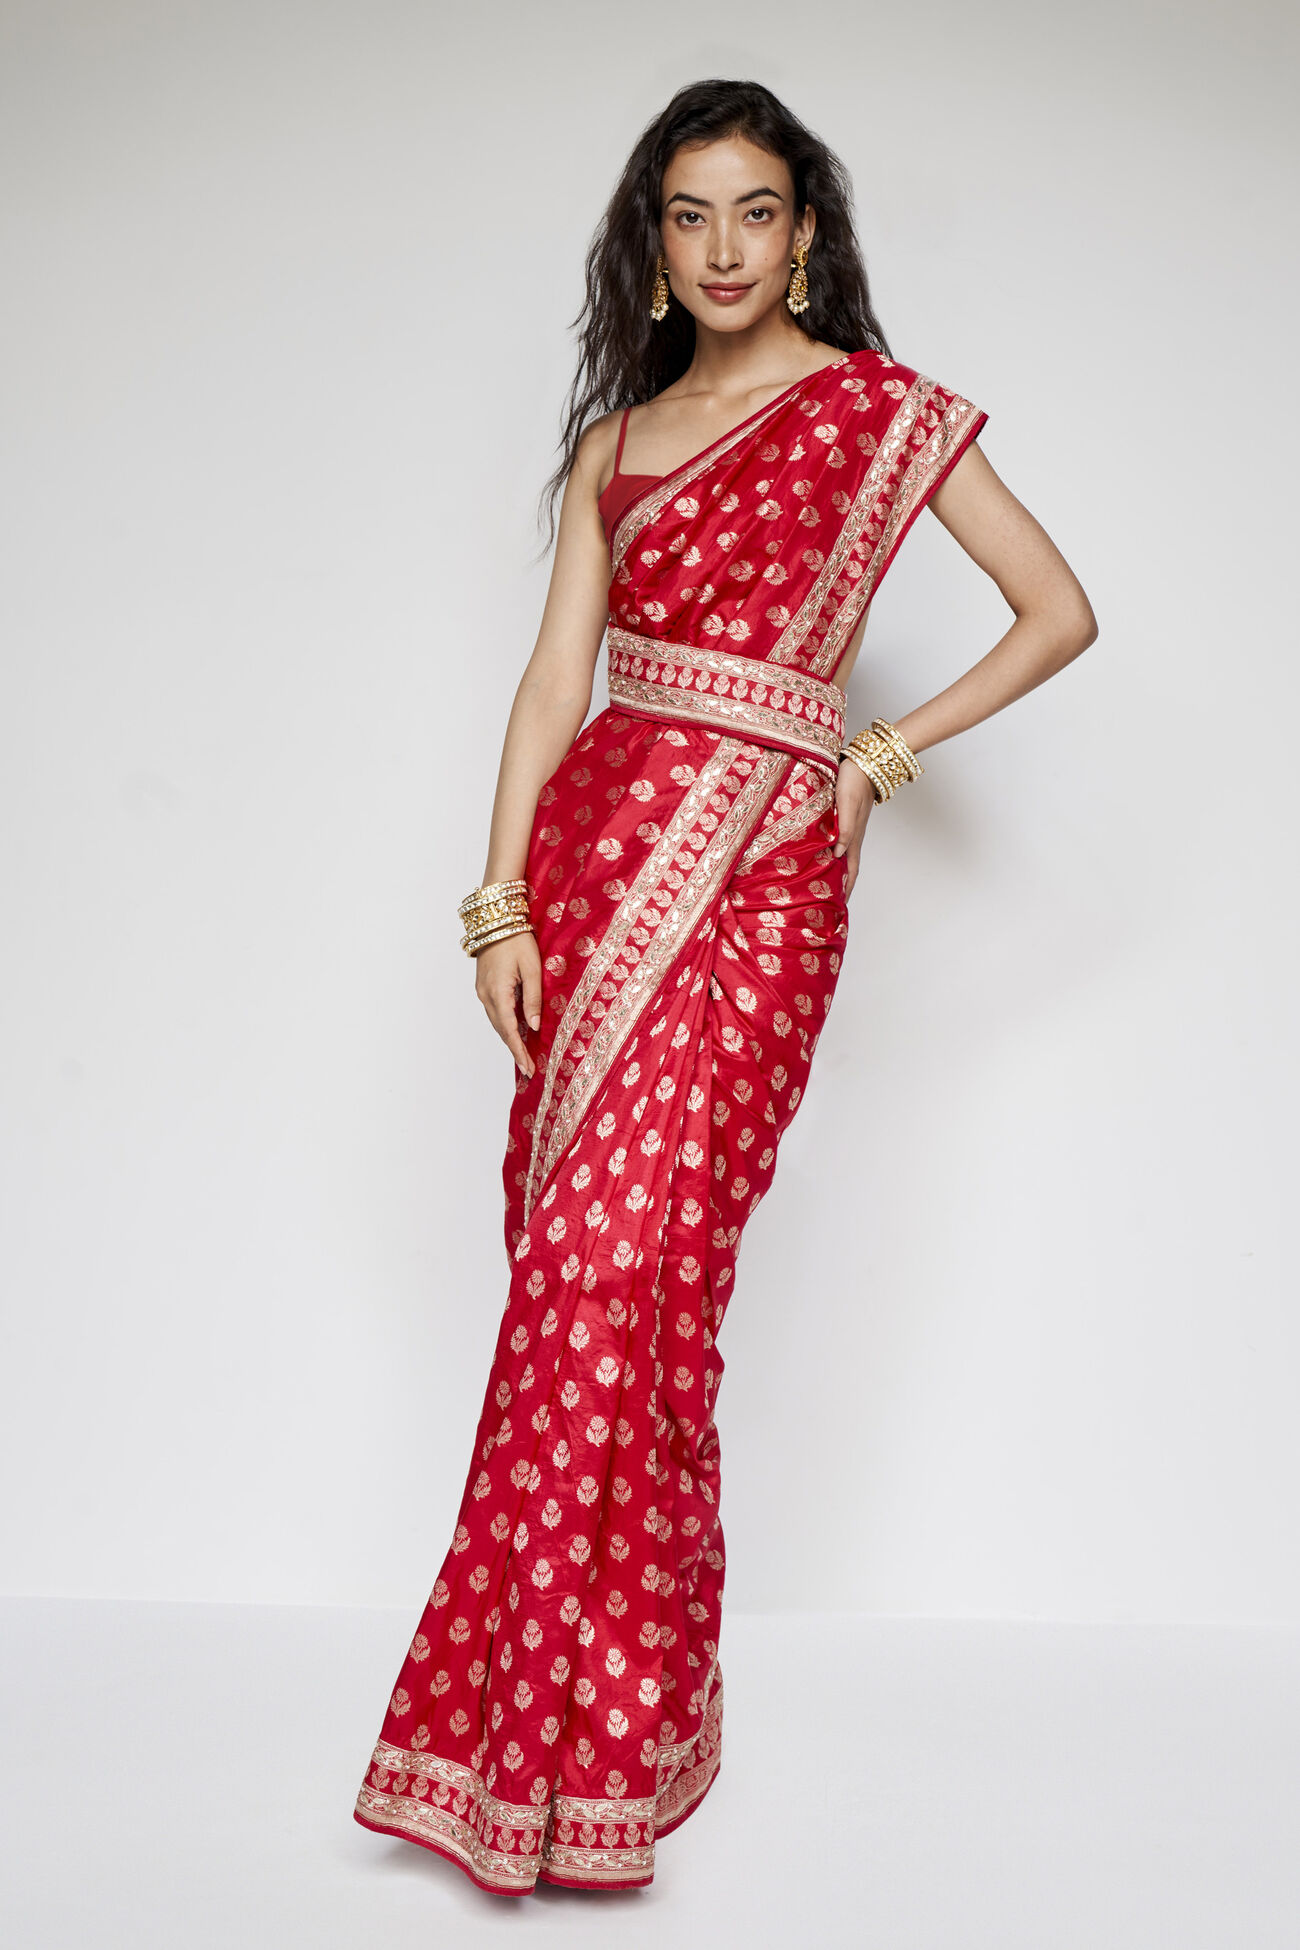 Shalena Benarasi Silk Embroidered Saree - Red, Red, image 2